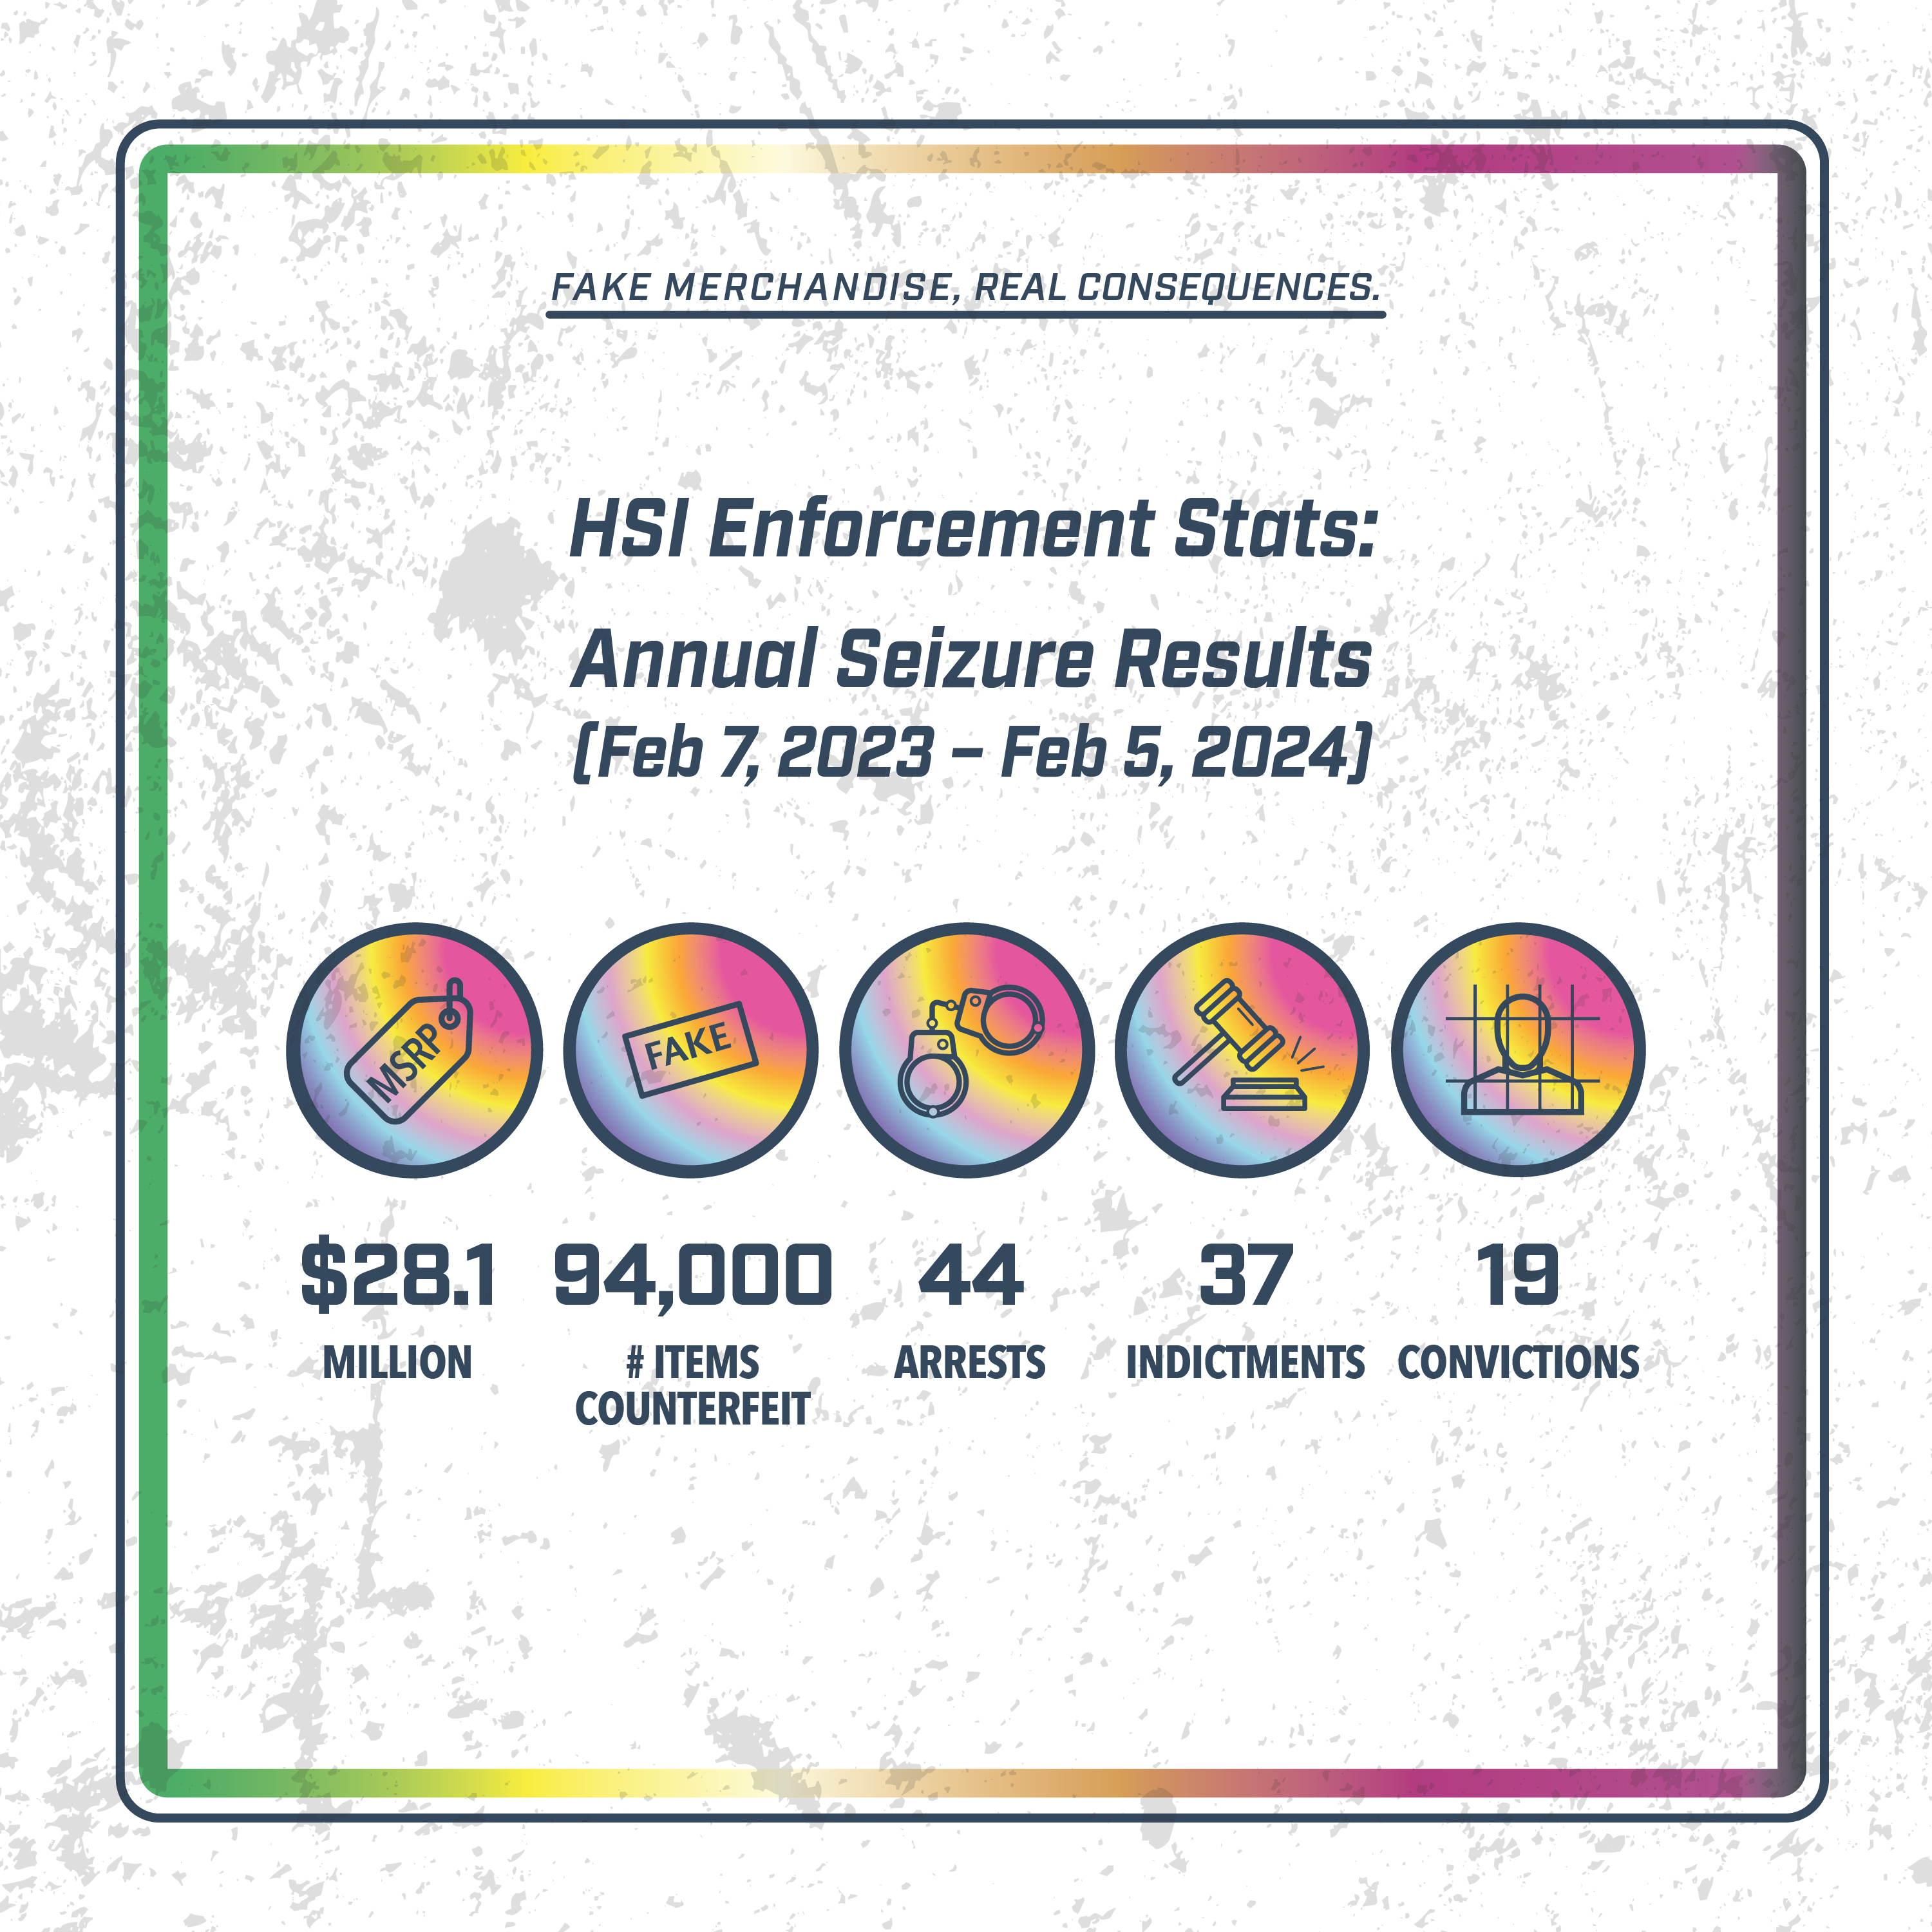 (2/7/2023 - 2/7/2024) - HSI Annual Seizure Results